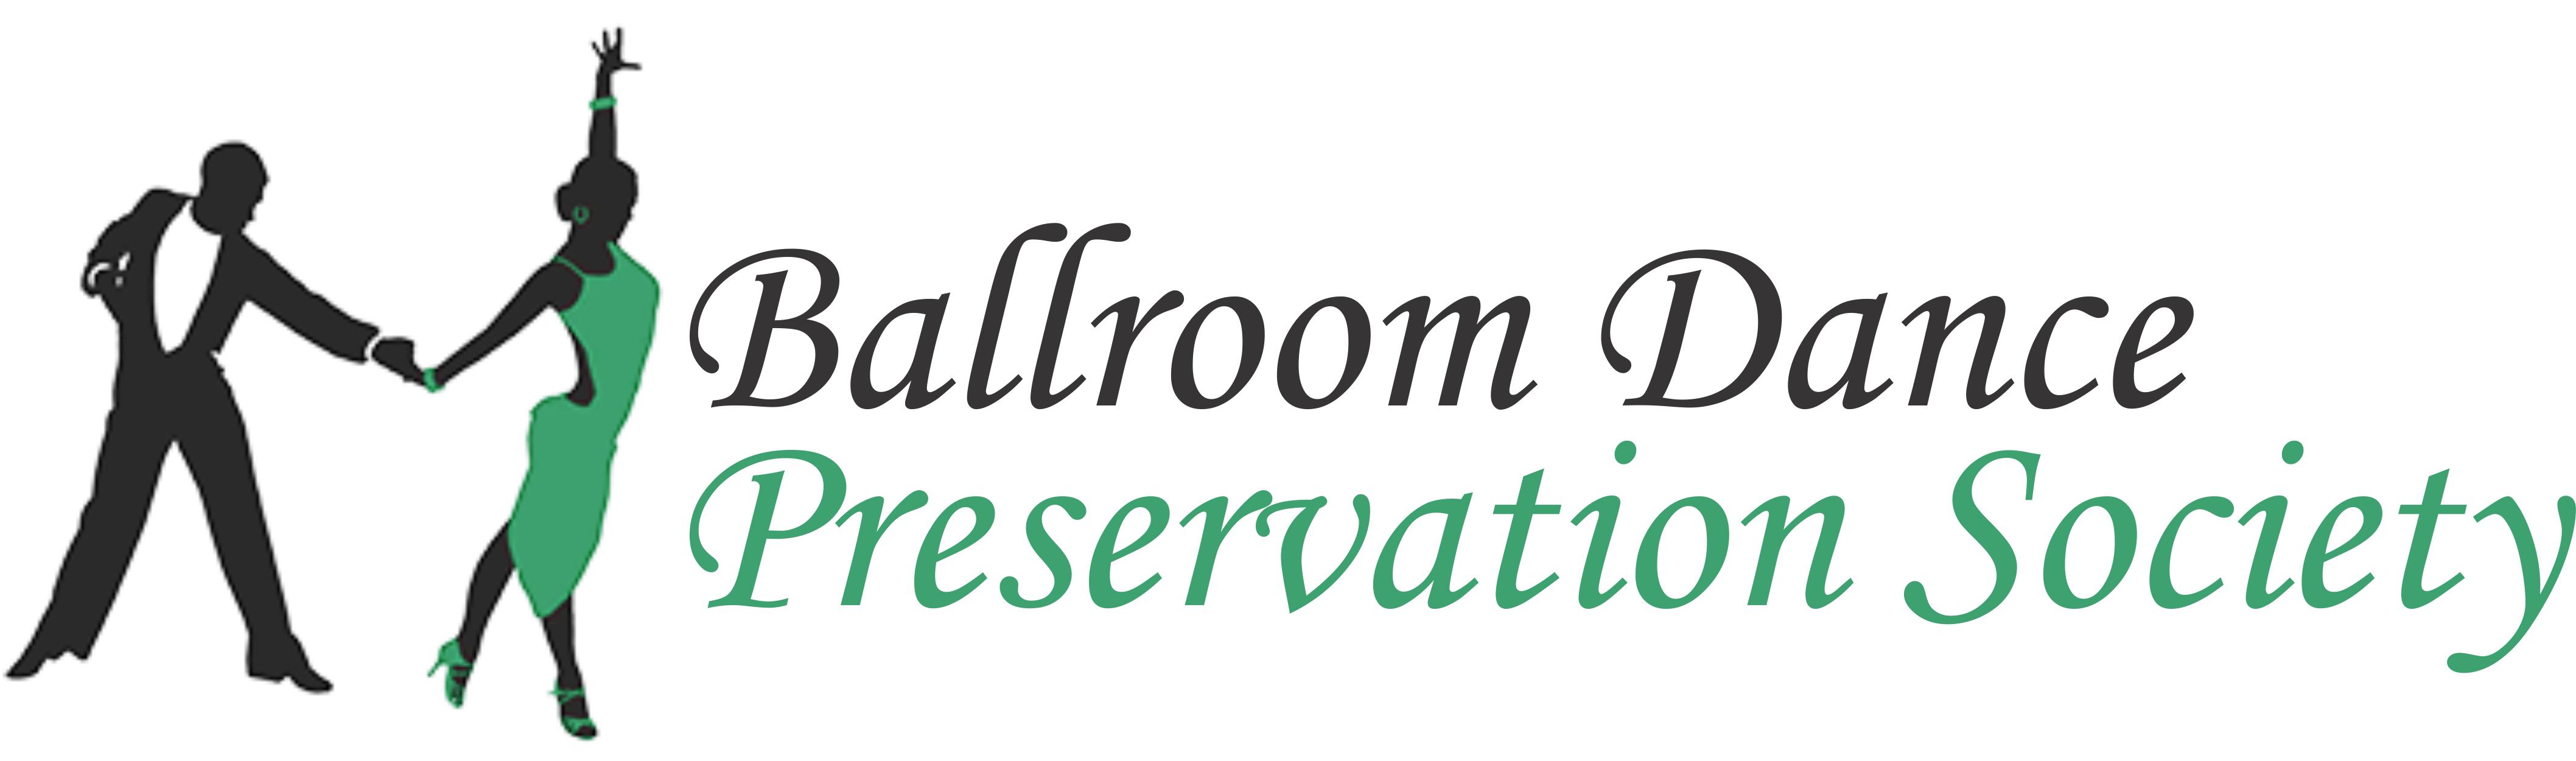 Ballroom Dance Preservation Society